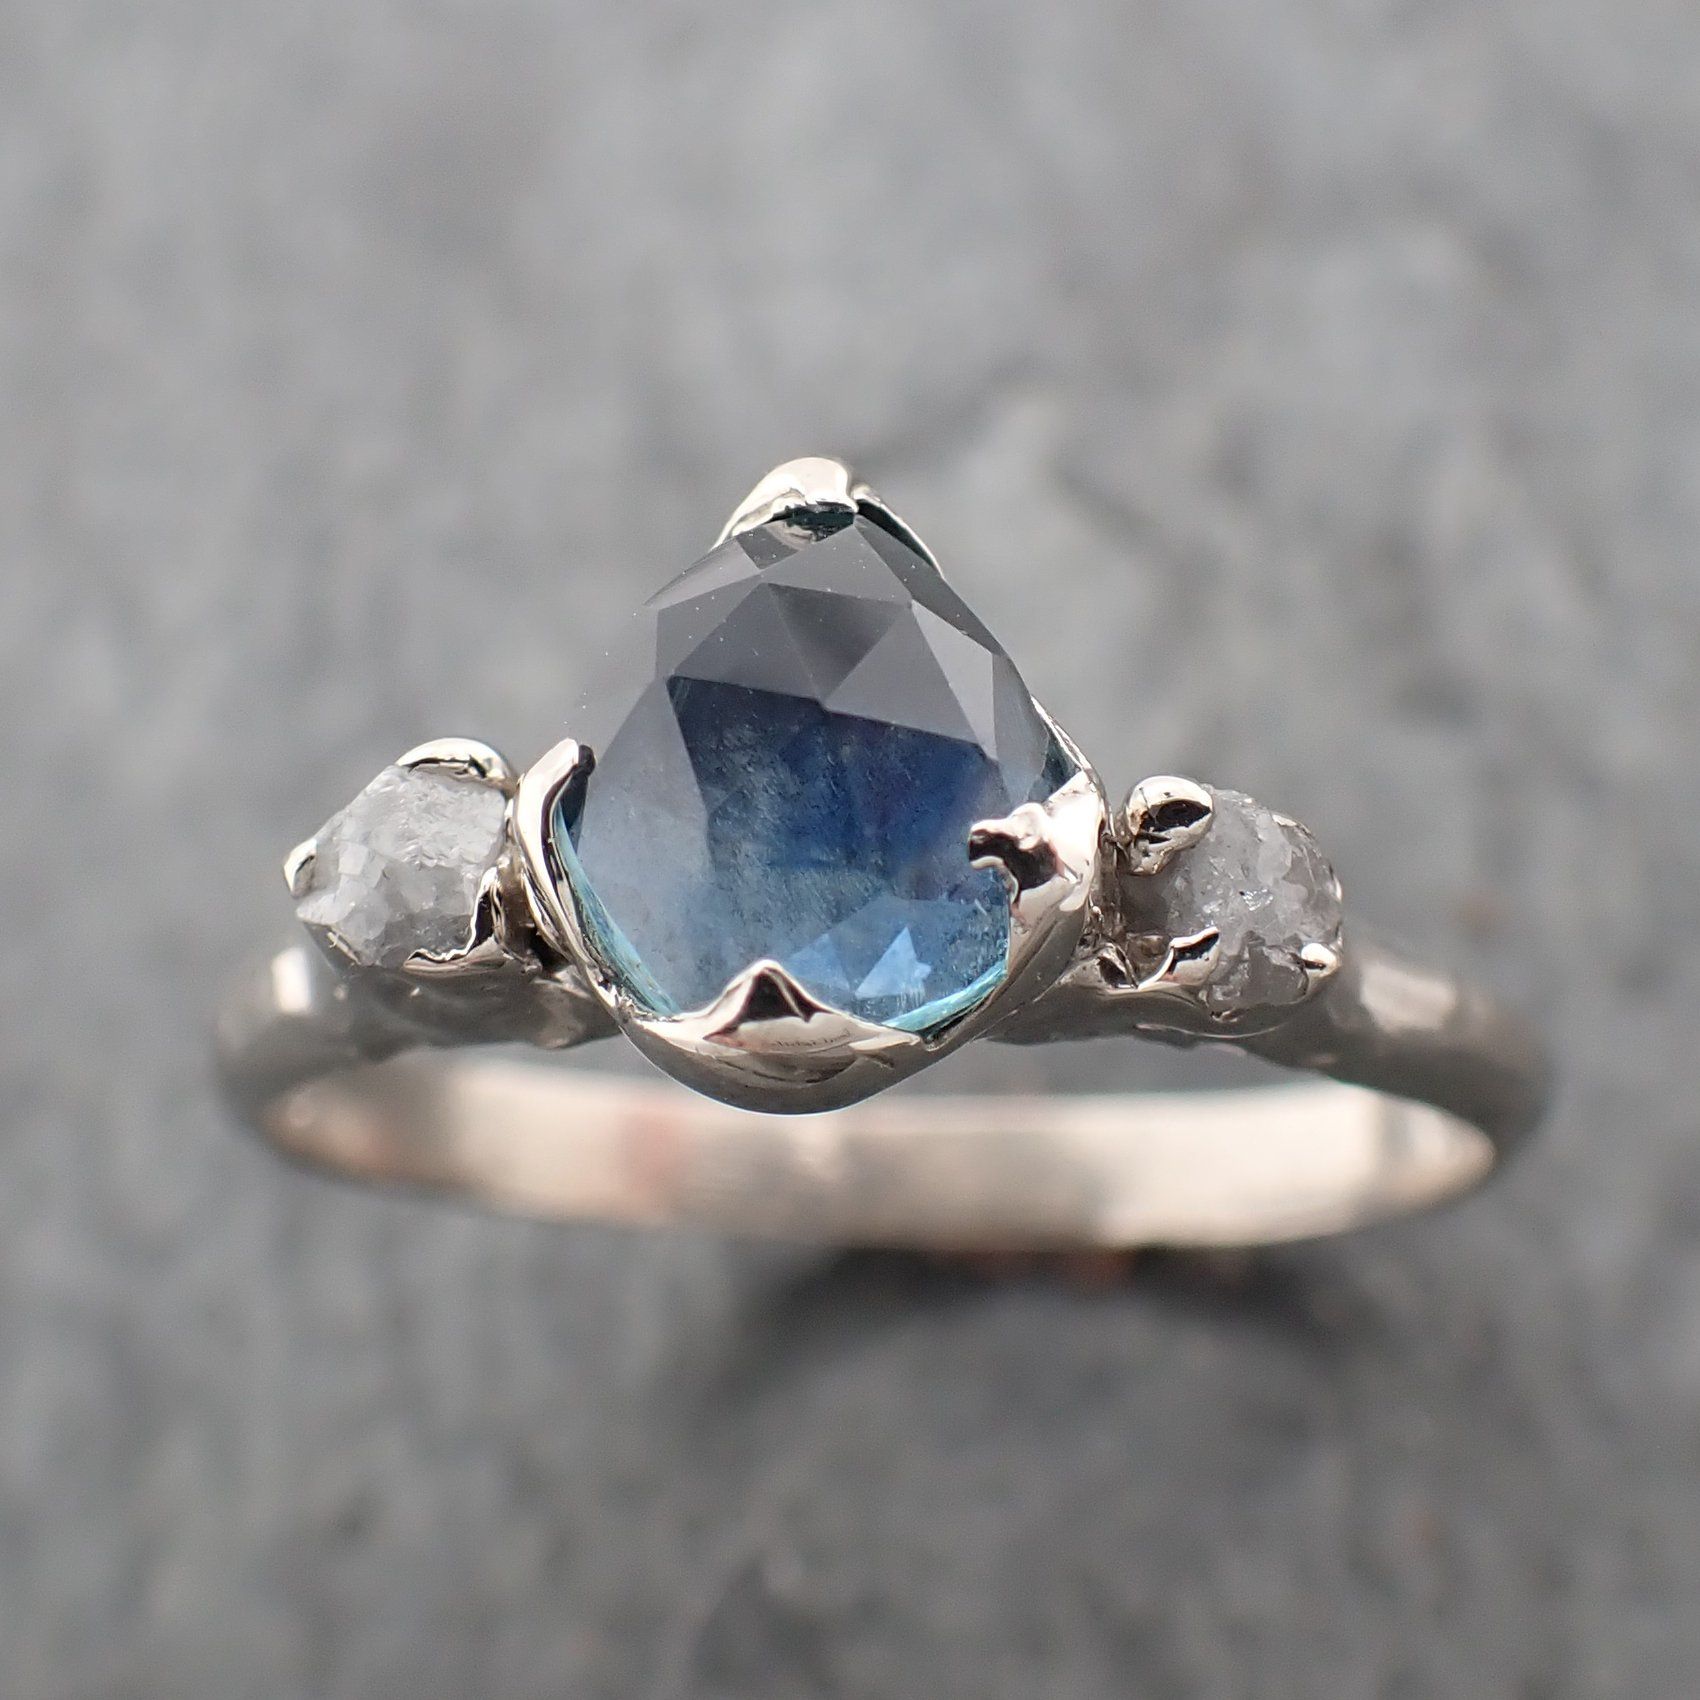 fancy cut montana blue sapphire 14k white gold ring gold multi stone gemstone engagement 2285 Alternative Engagement